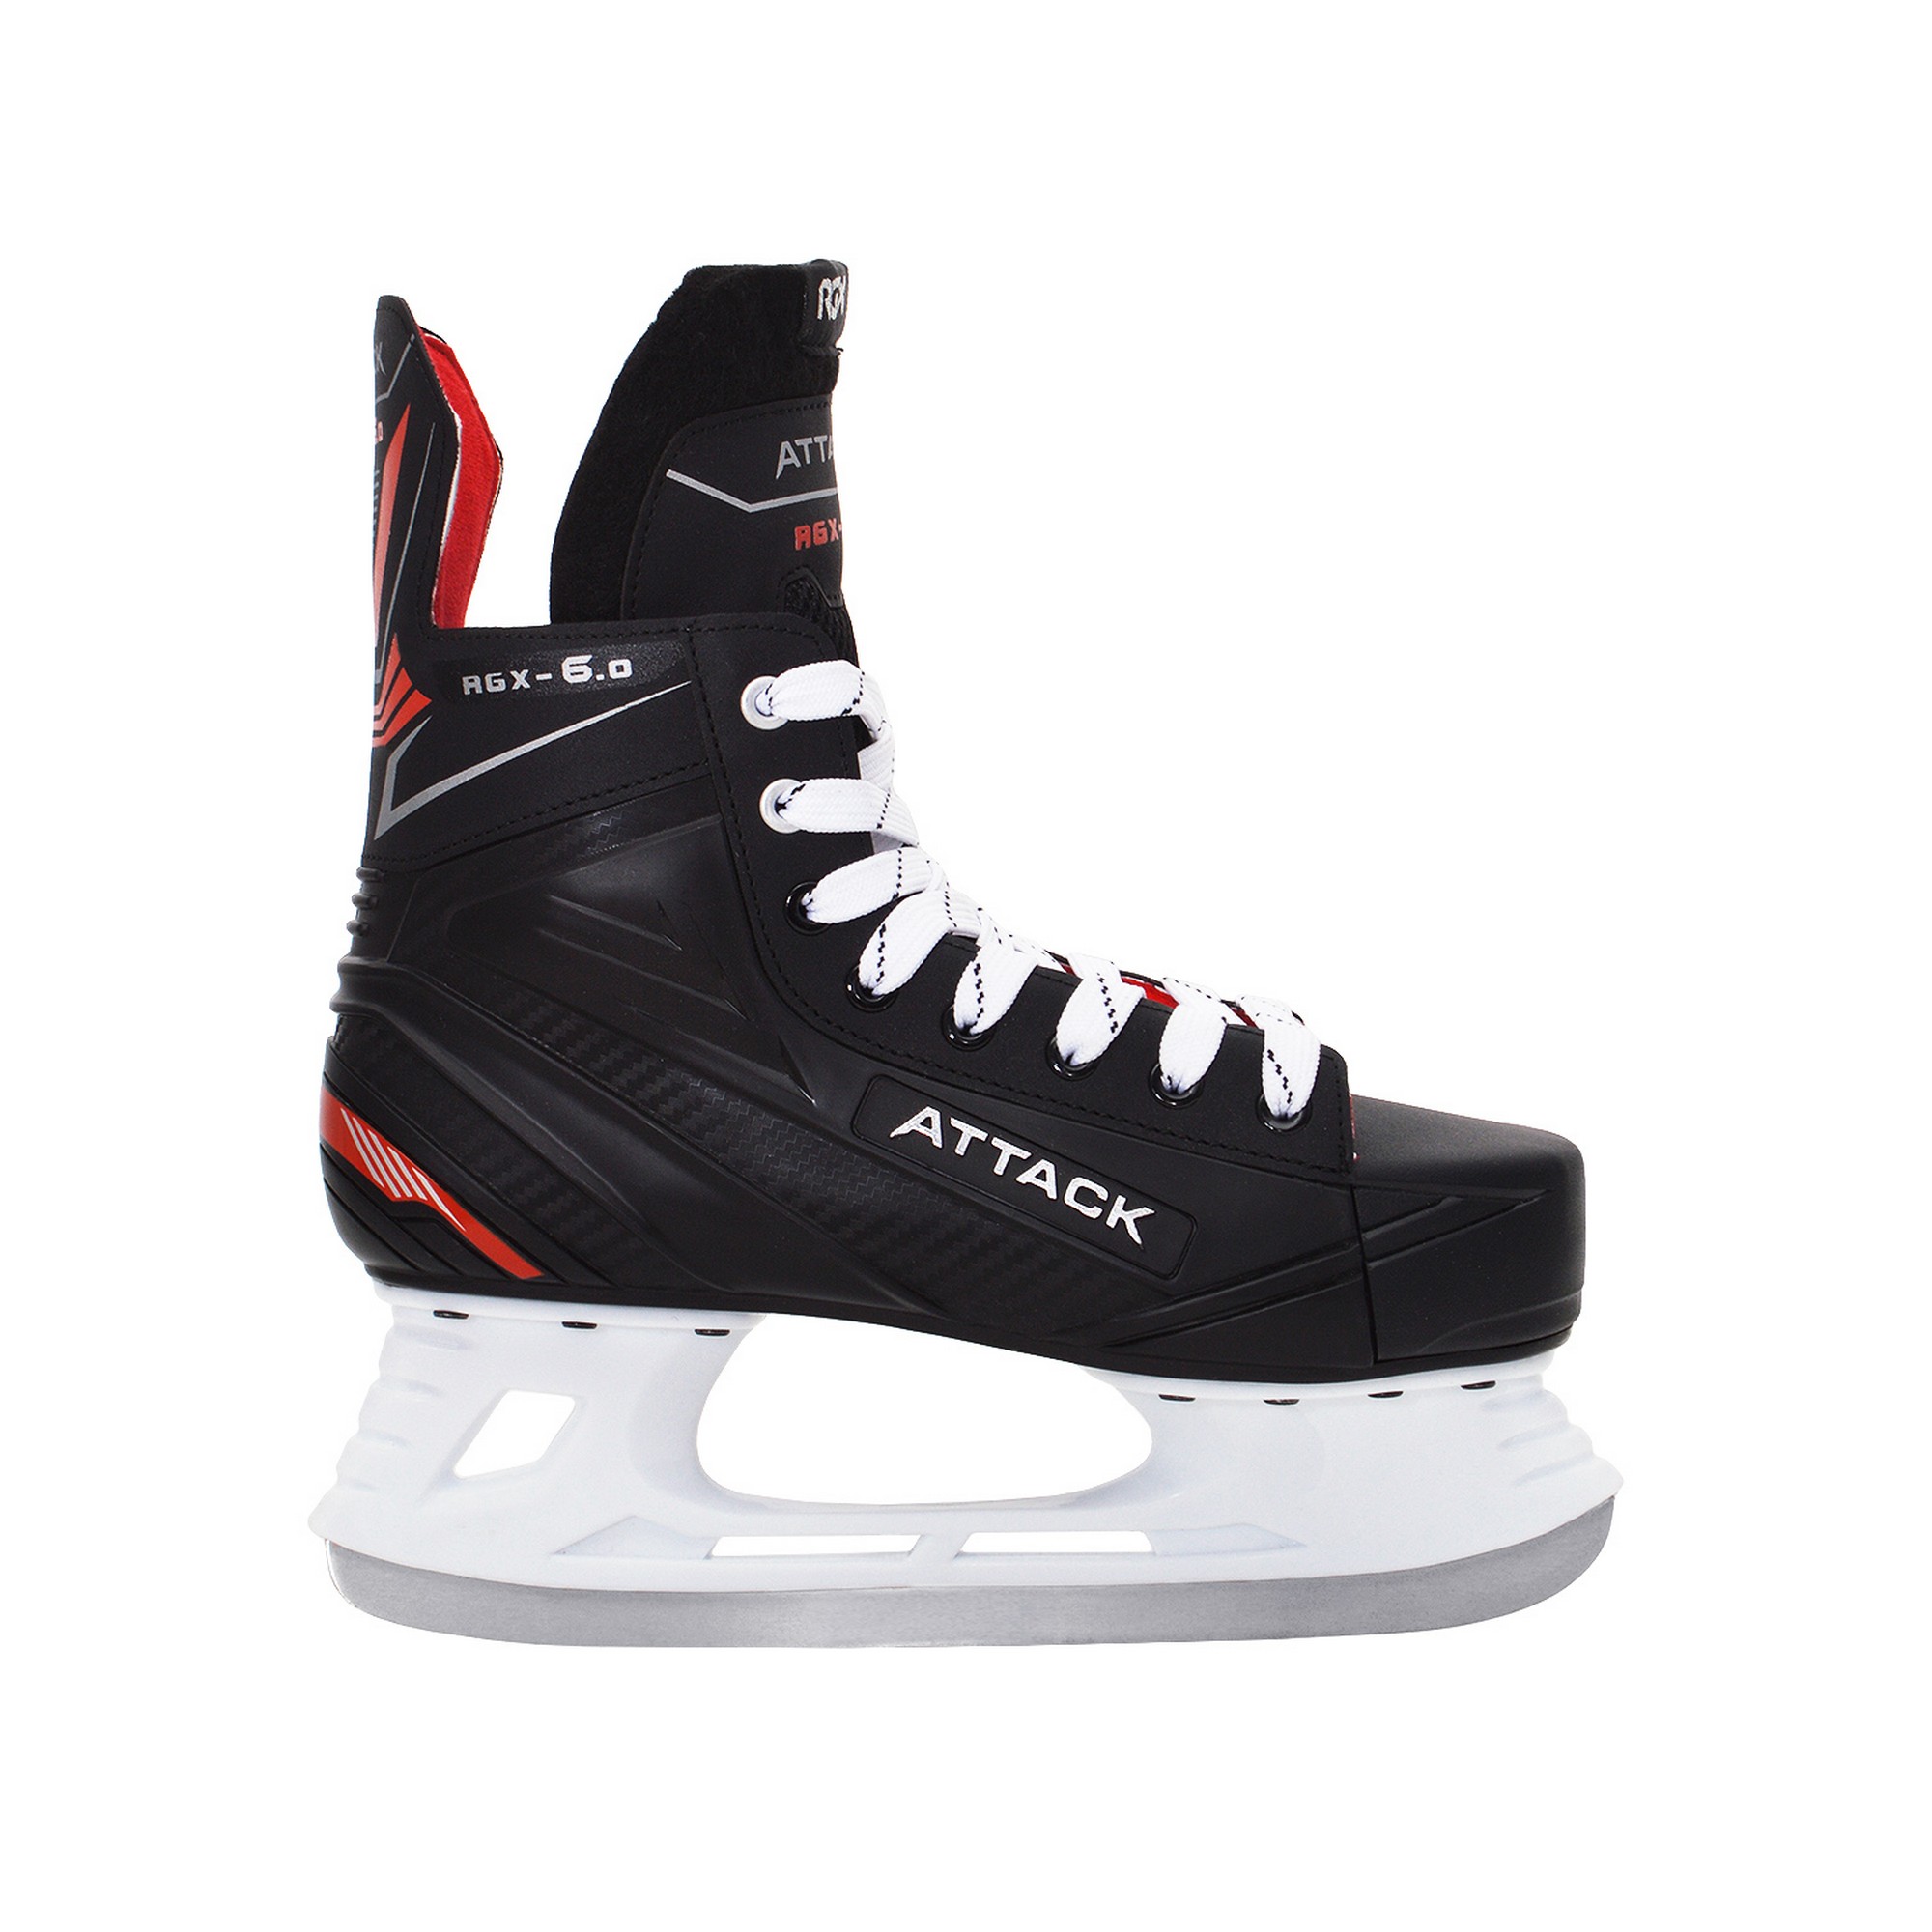 Хоккейные коньки RGX RGX-6.0 ATTACK Red 2000_2000